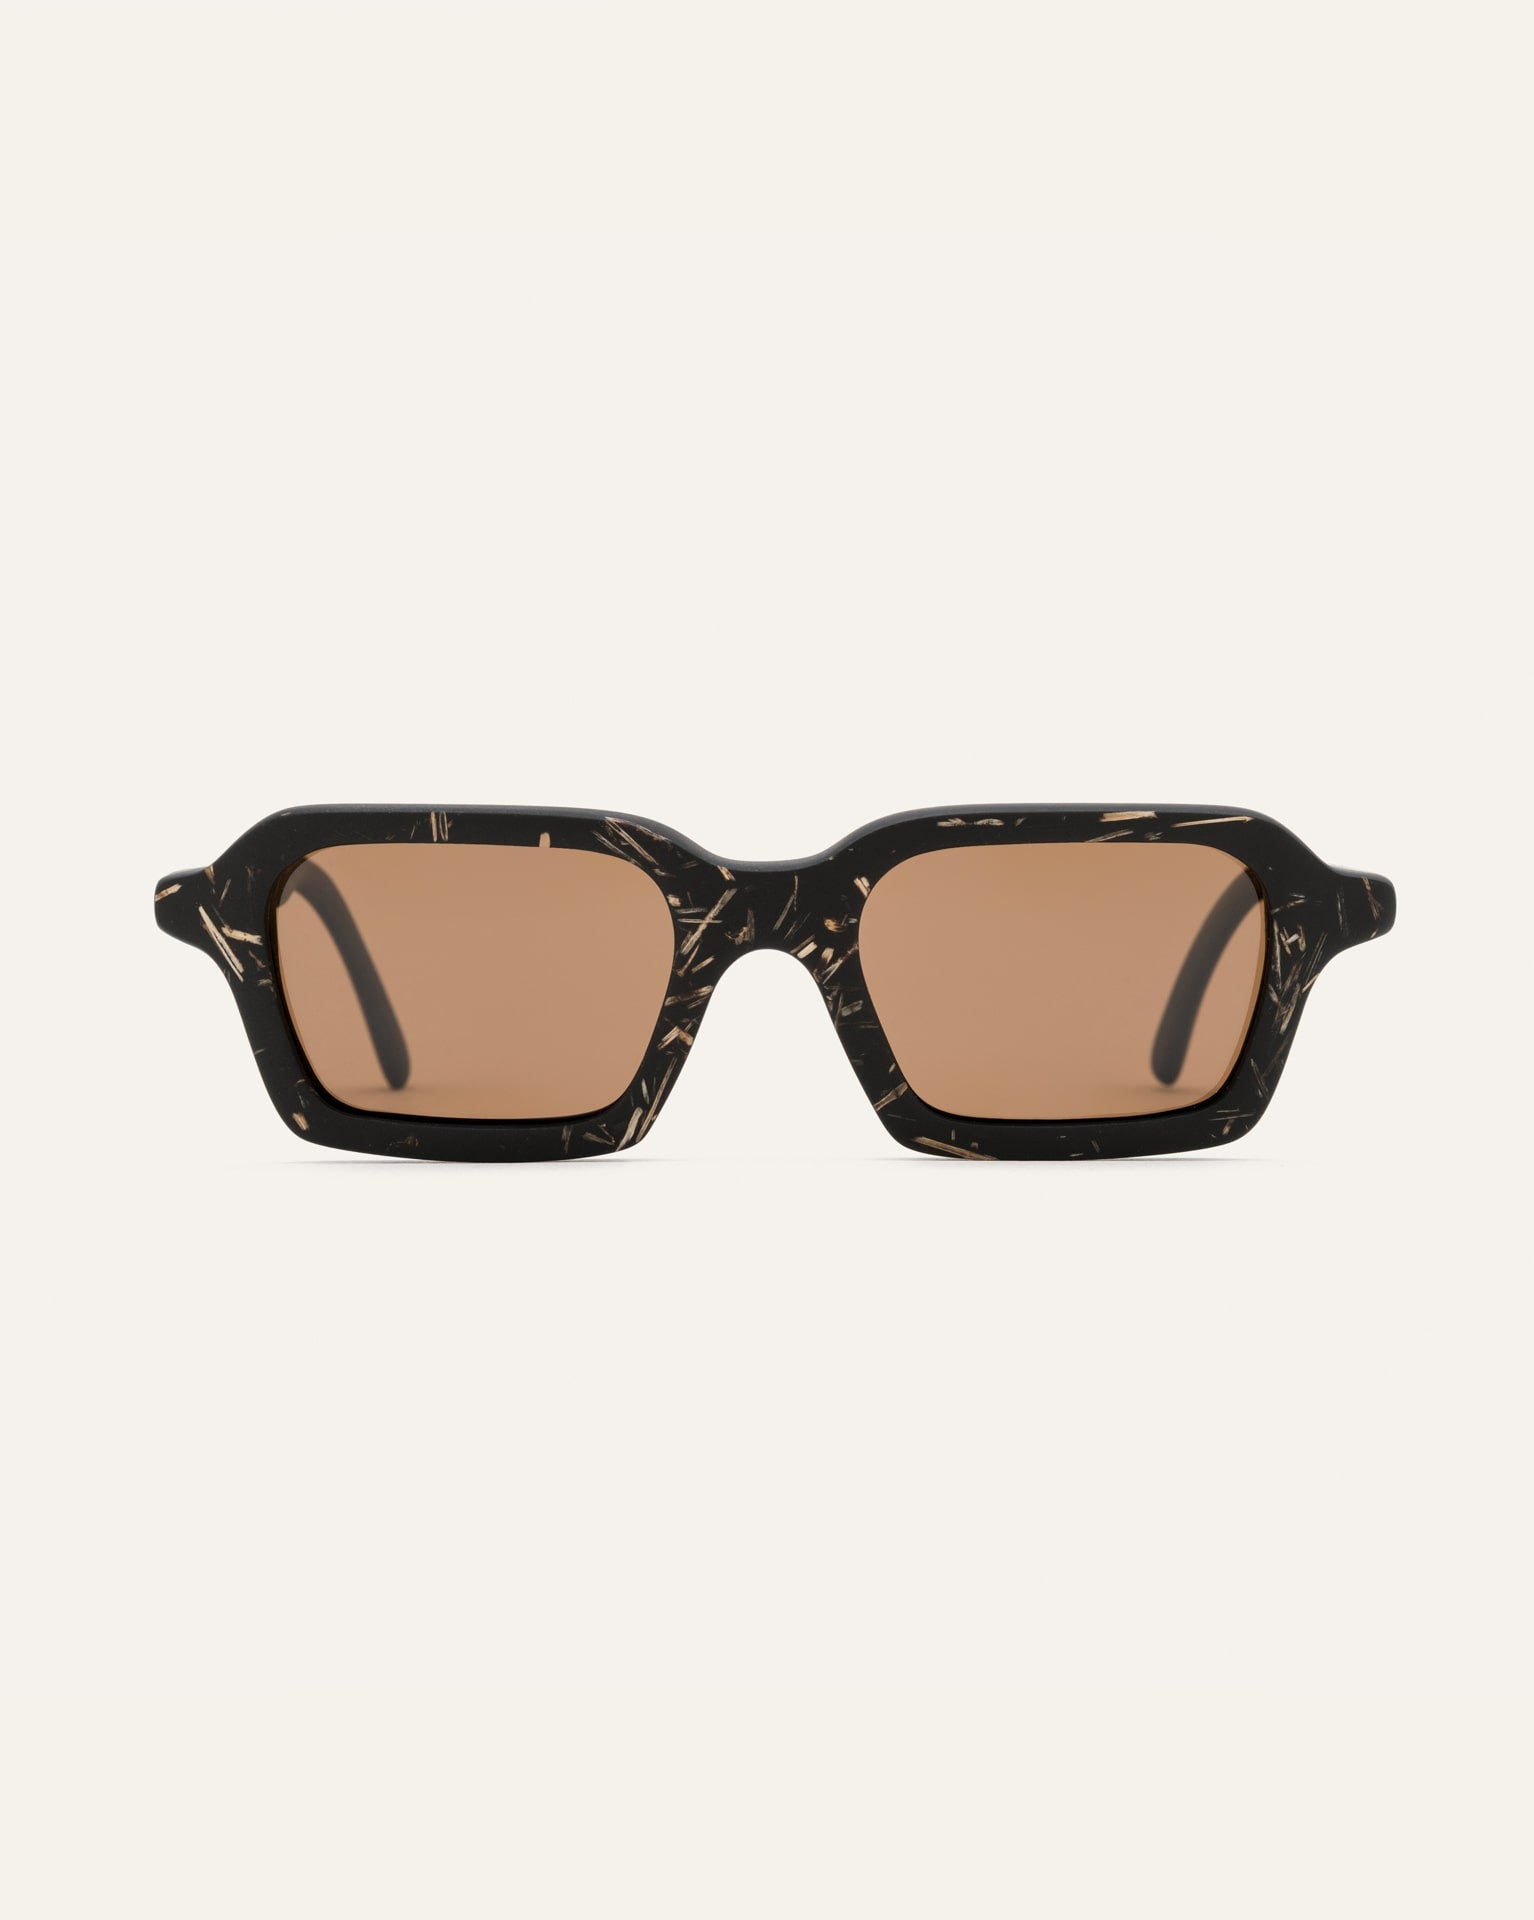 sunglasses with polarizing filter